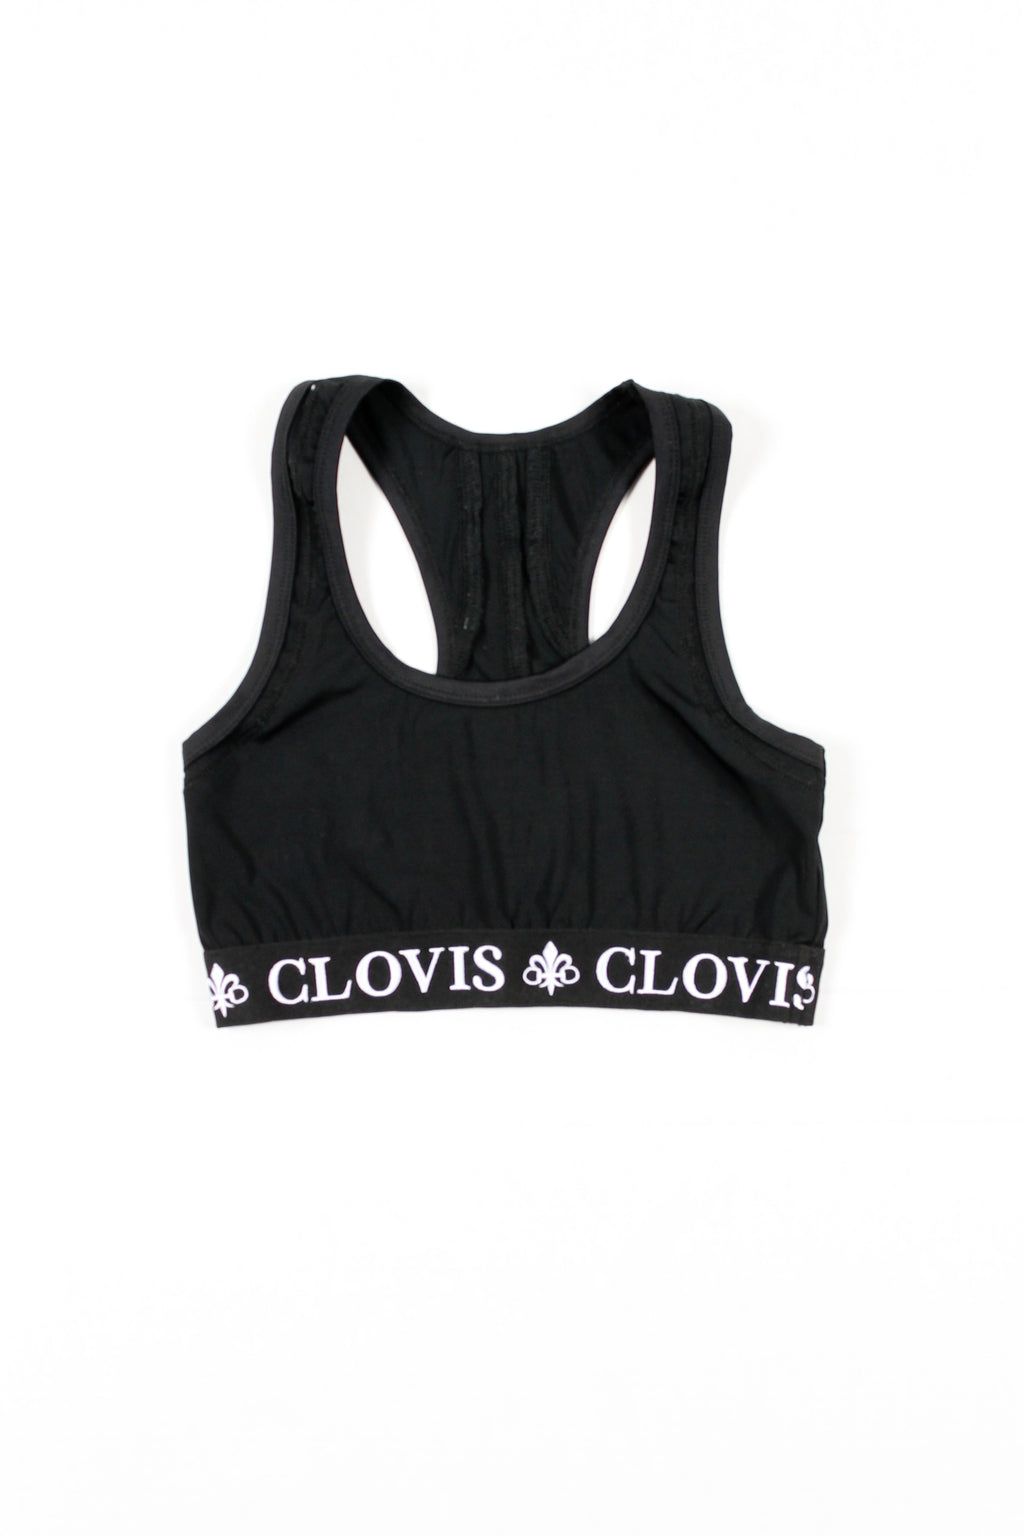 Clovis – CLOVIS